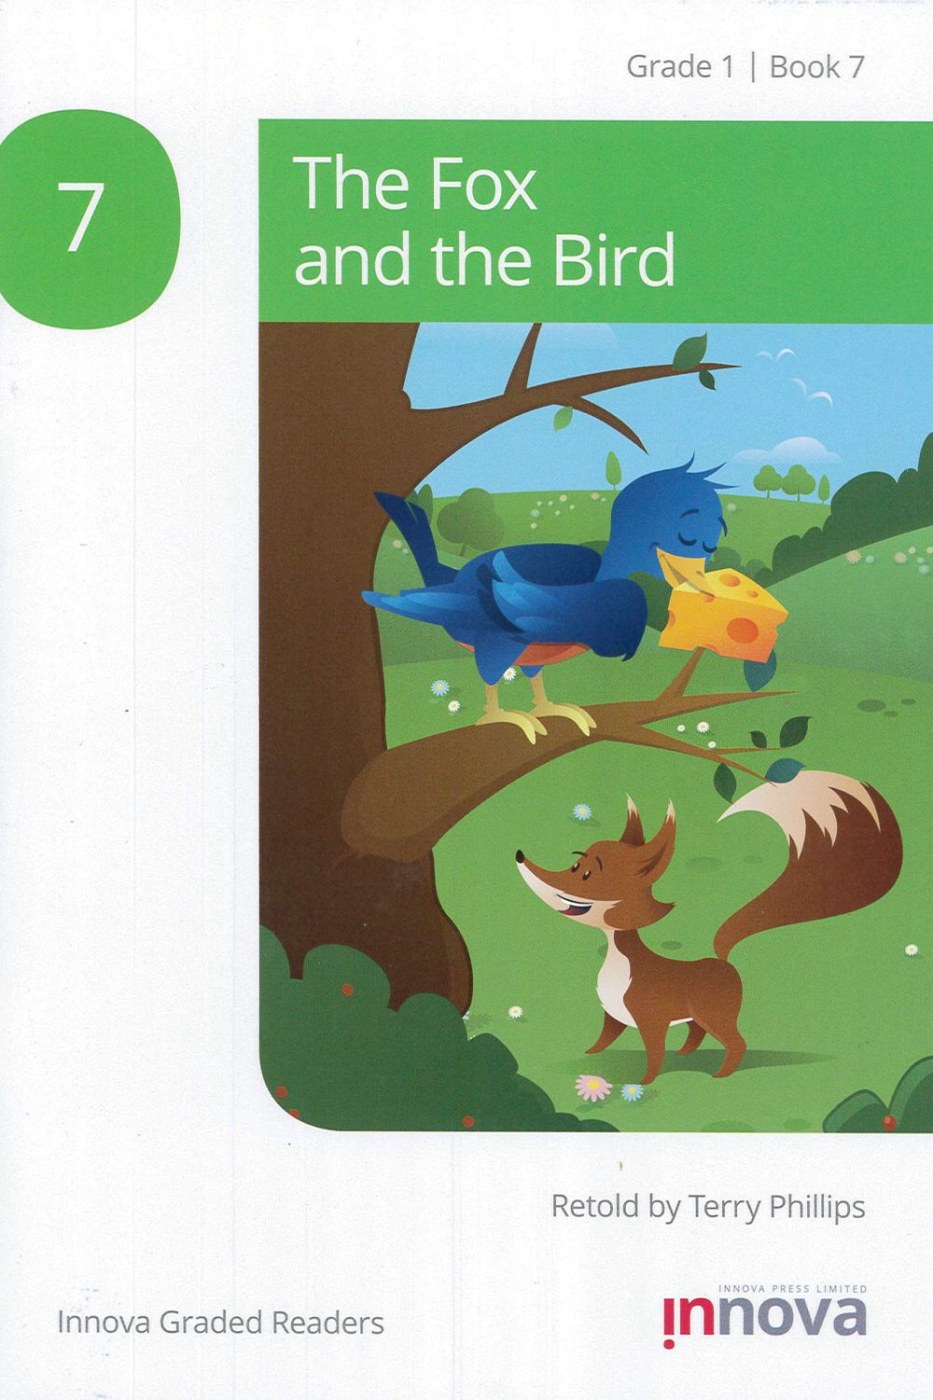 Innova Graded Readers Grade 1 (Book 7): The Fox and the Bird